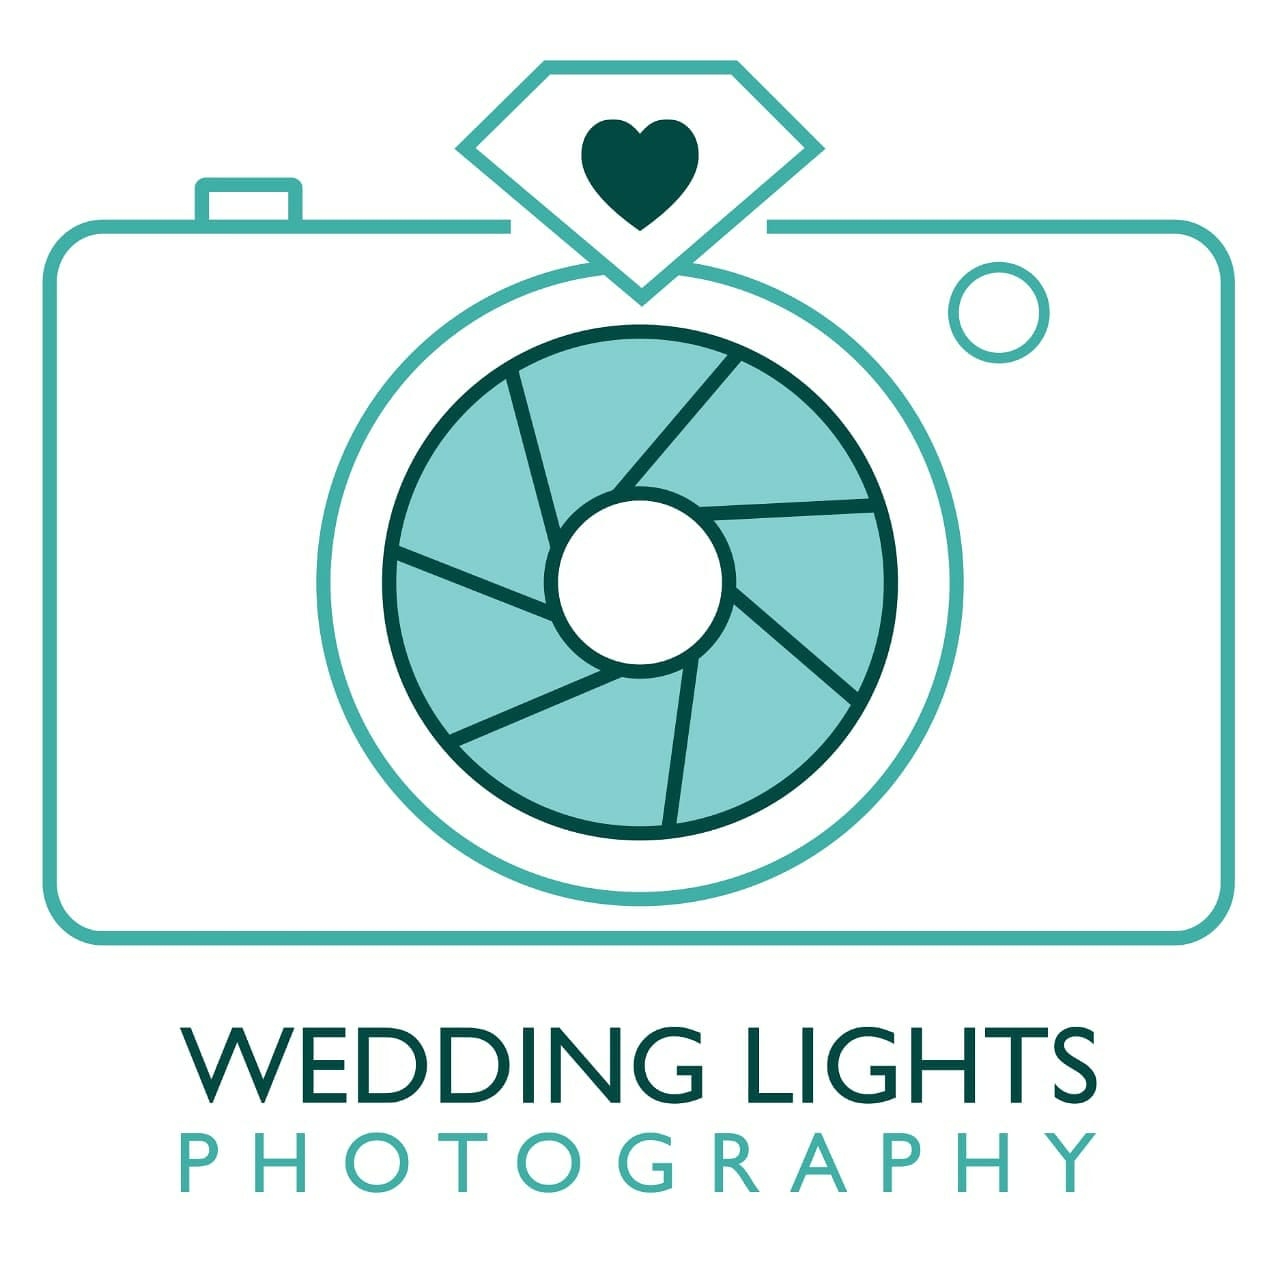 wedding lights photography|Banquet Halls|Event Services